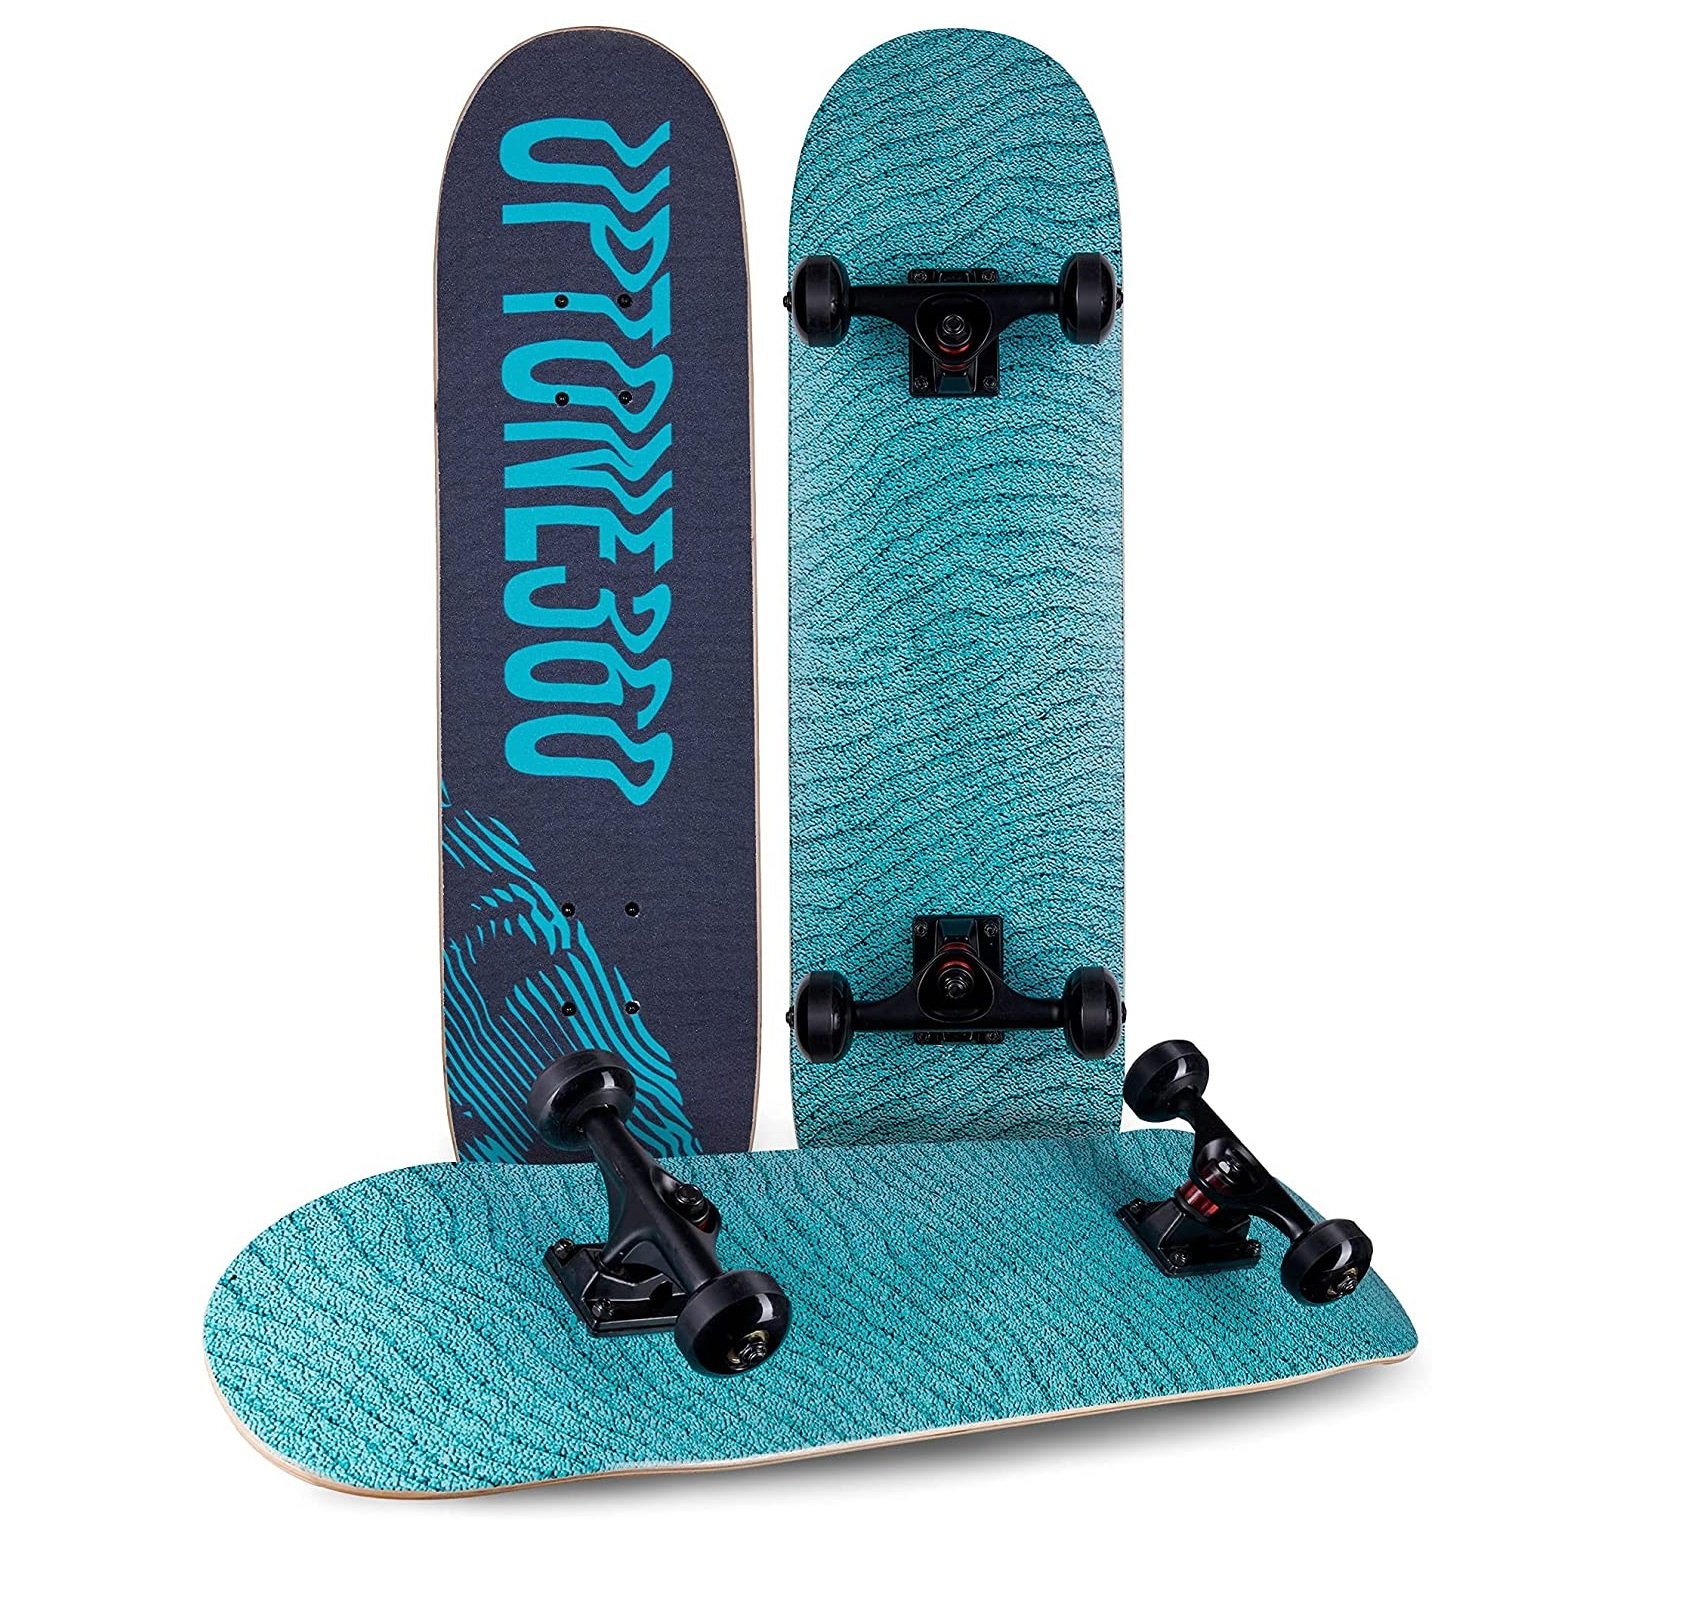 Children's skateboard - UpTone360